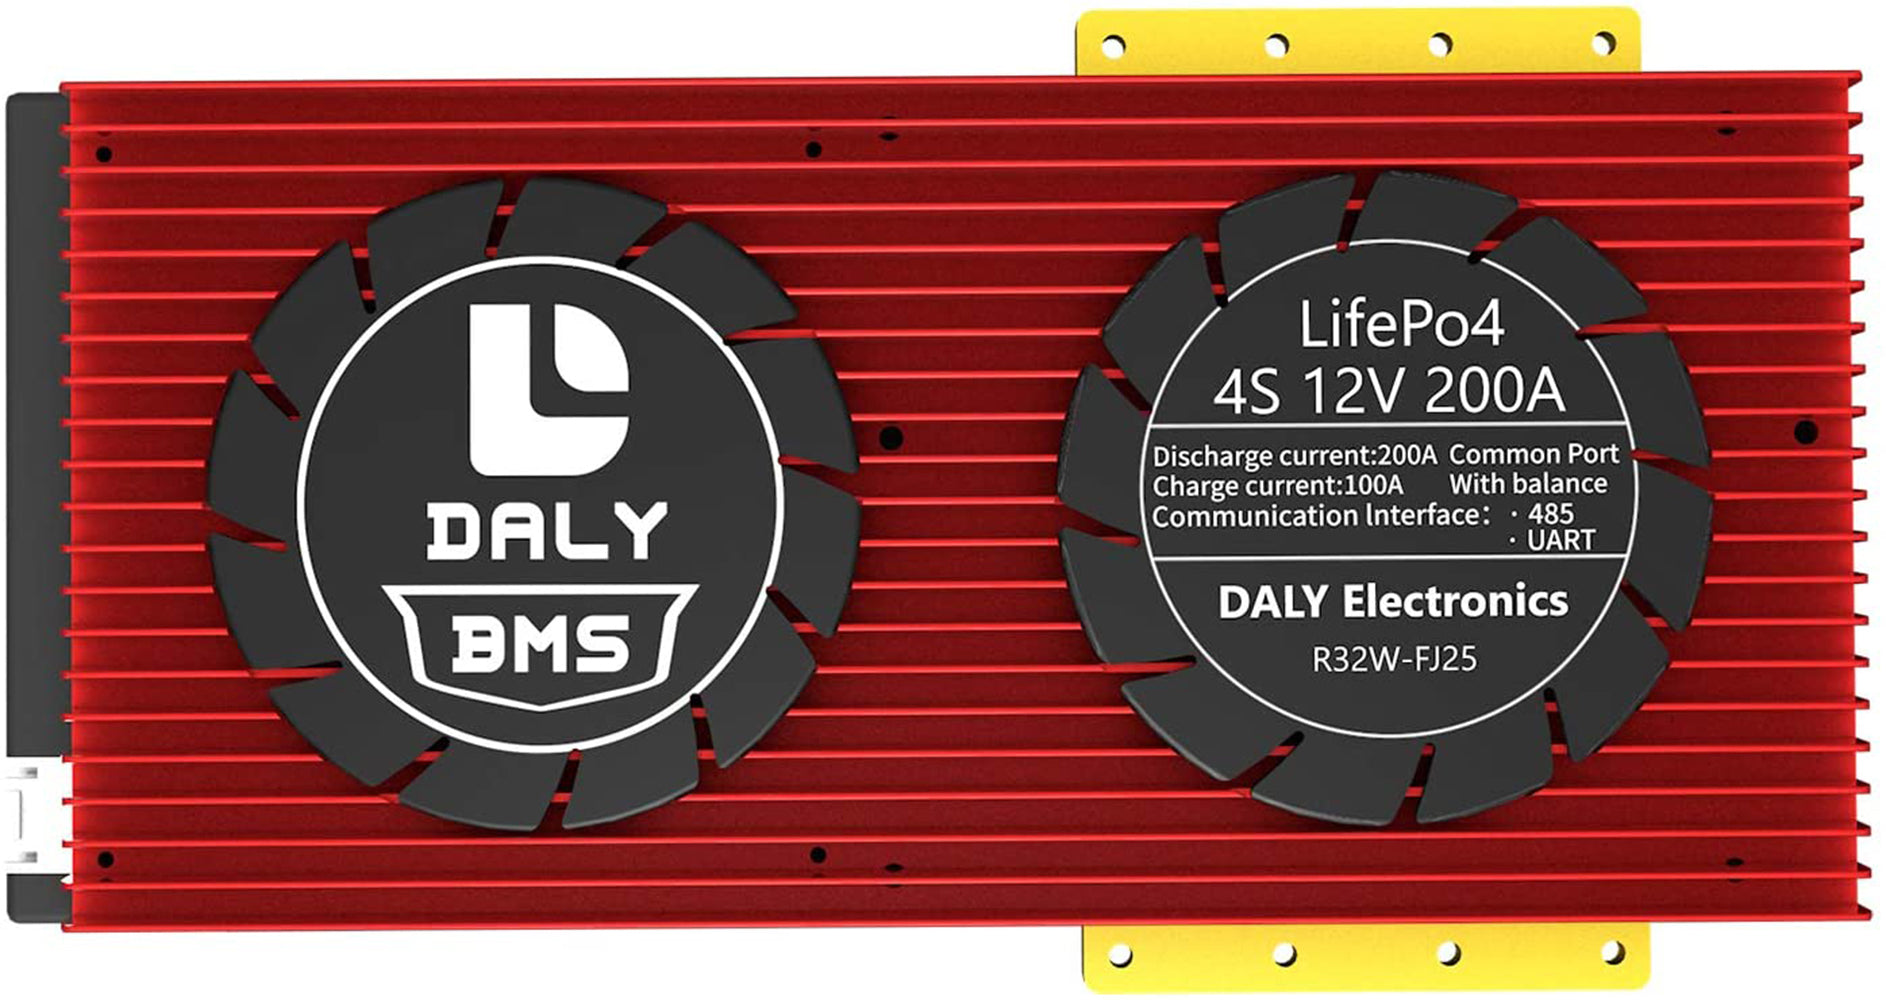 Daly smart bms Lifepo 4S 12V 200A  bluetooth BMS board 32130221